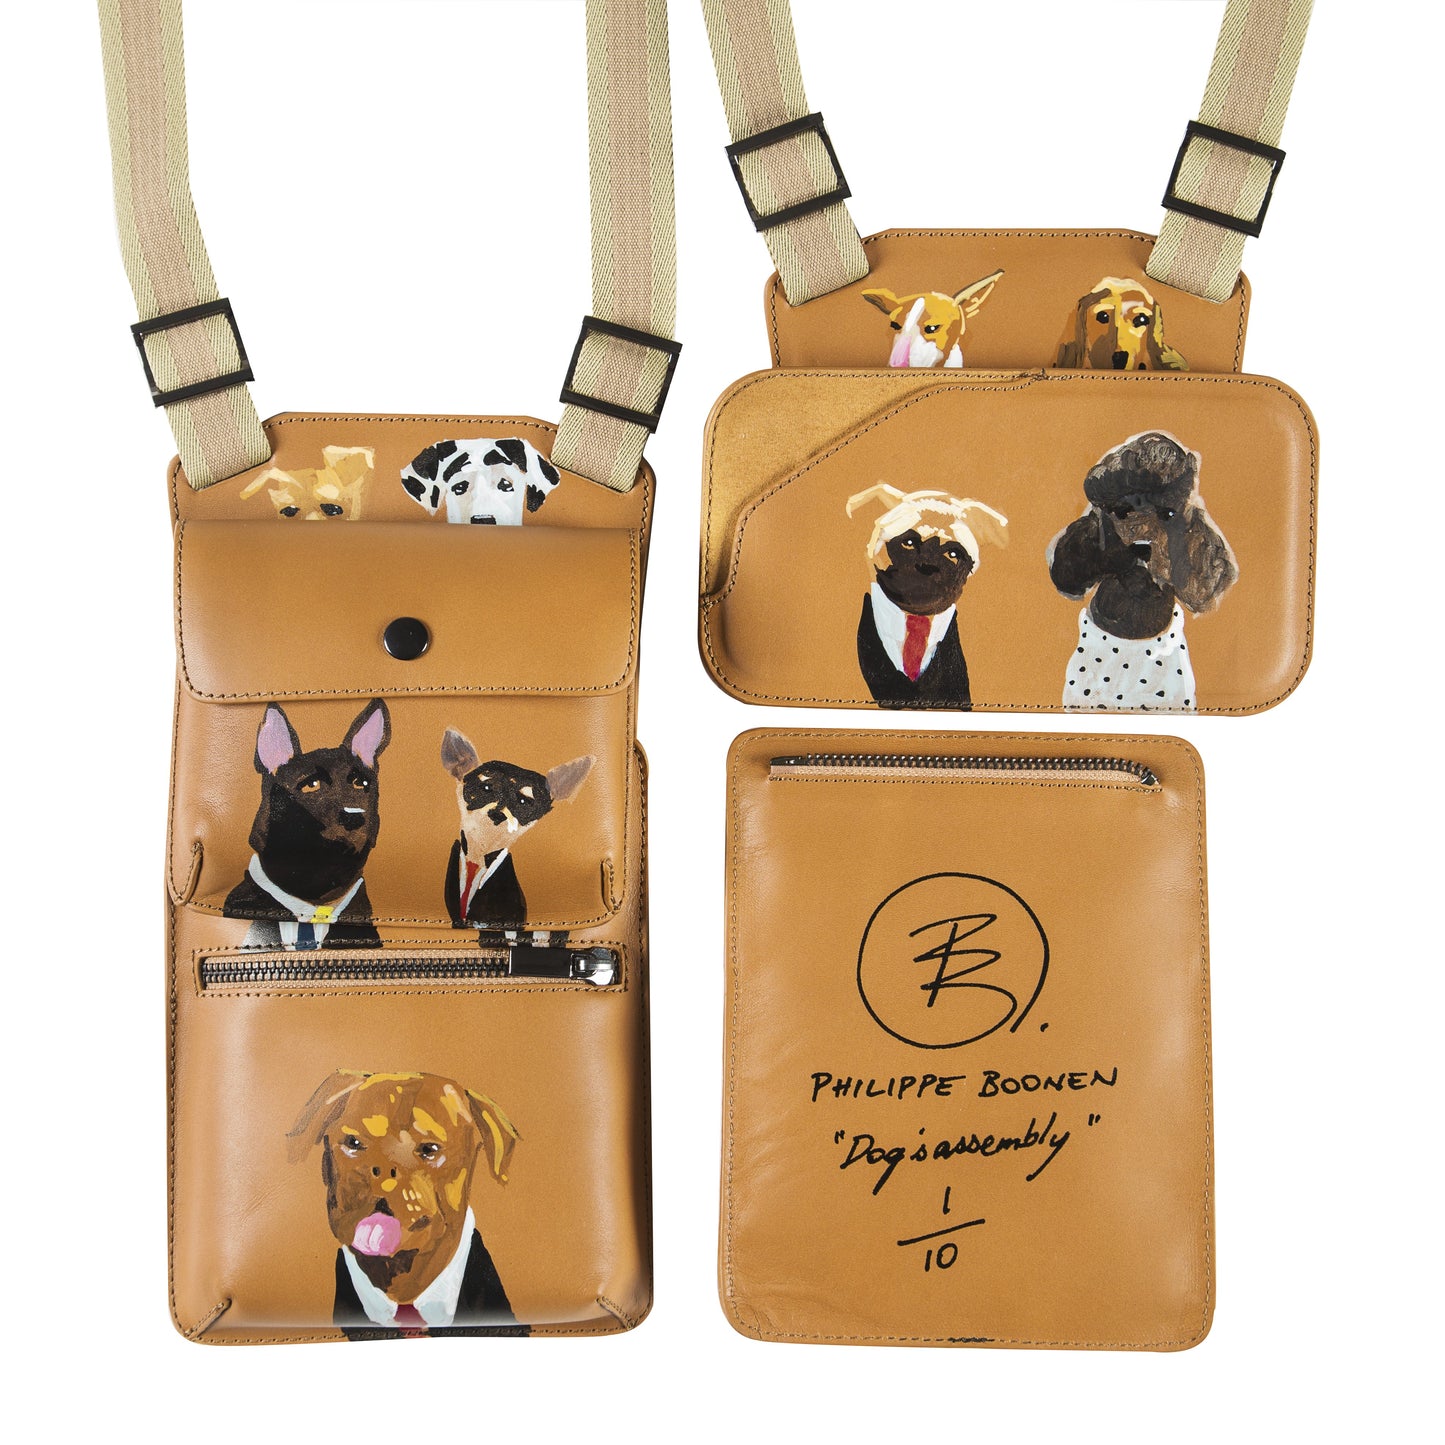 Harness Bag - Dog's Assembly - Anna Cortina #ArtMeetsFashion